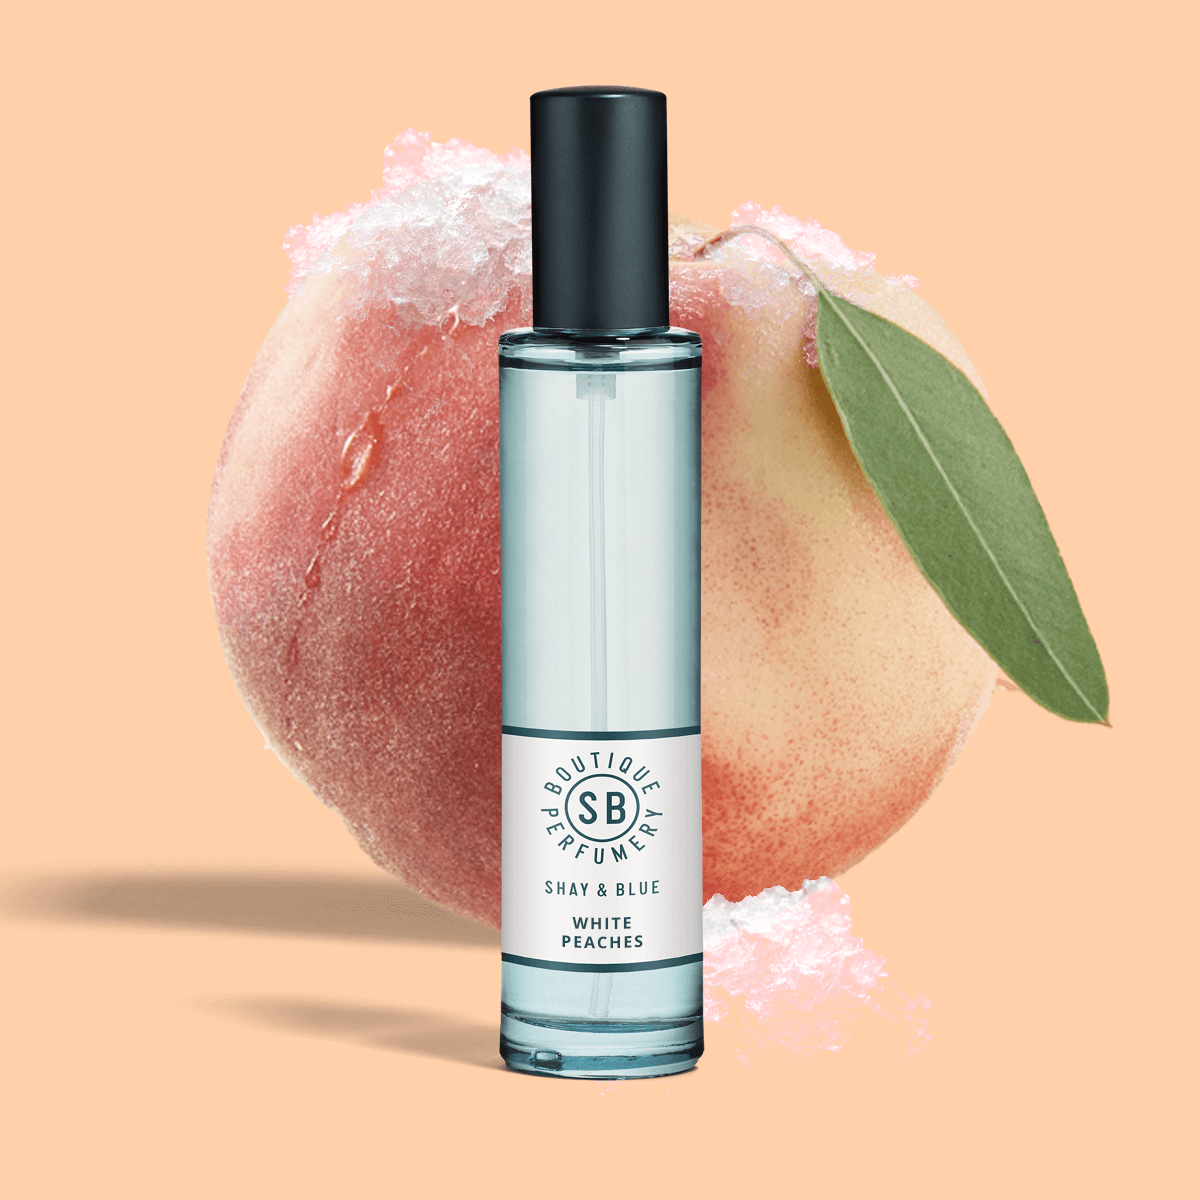 White Peaches Fragrance 30ml | Delicate perzik, vlierbloesem granita en zilverberk. | Schone geur voor alle seksen | Shay & Blue